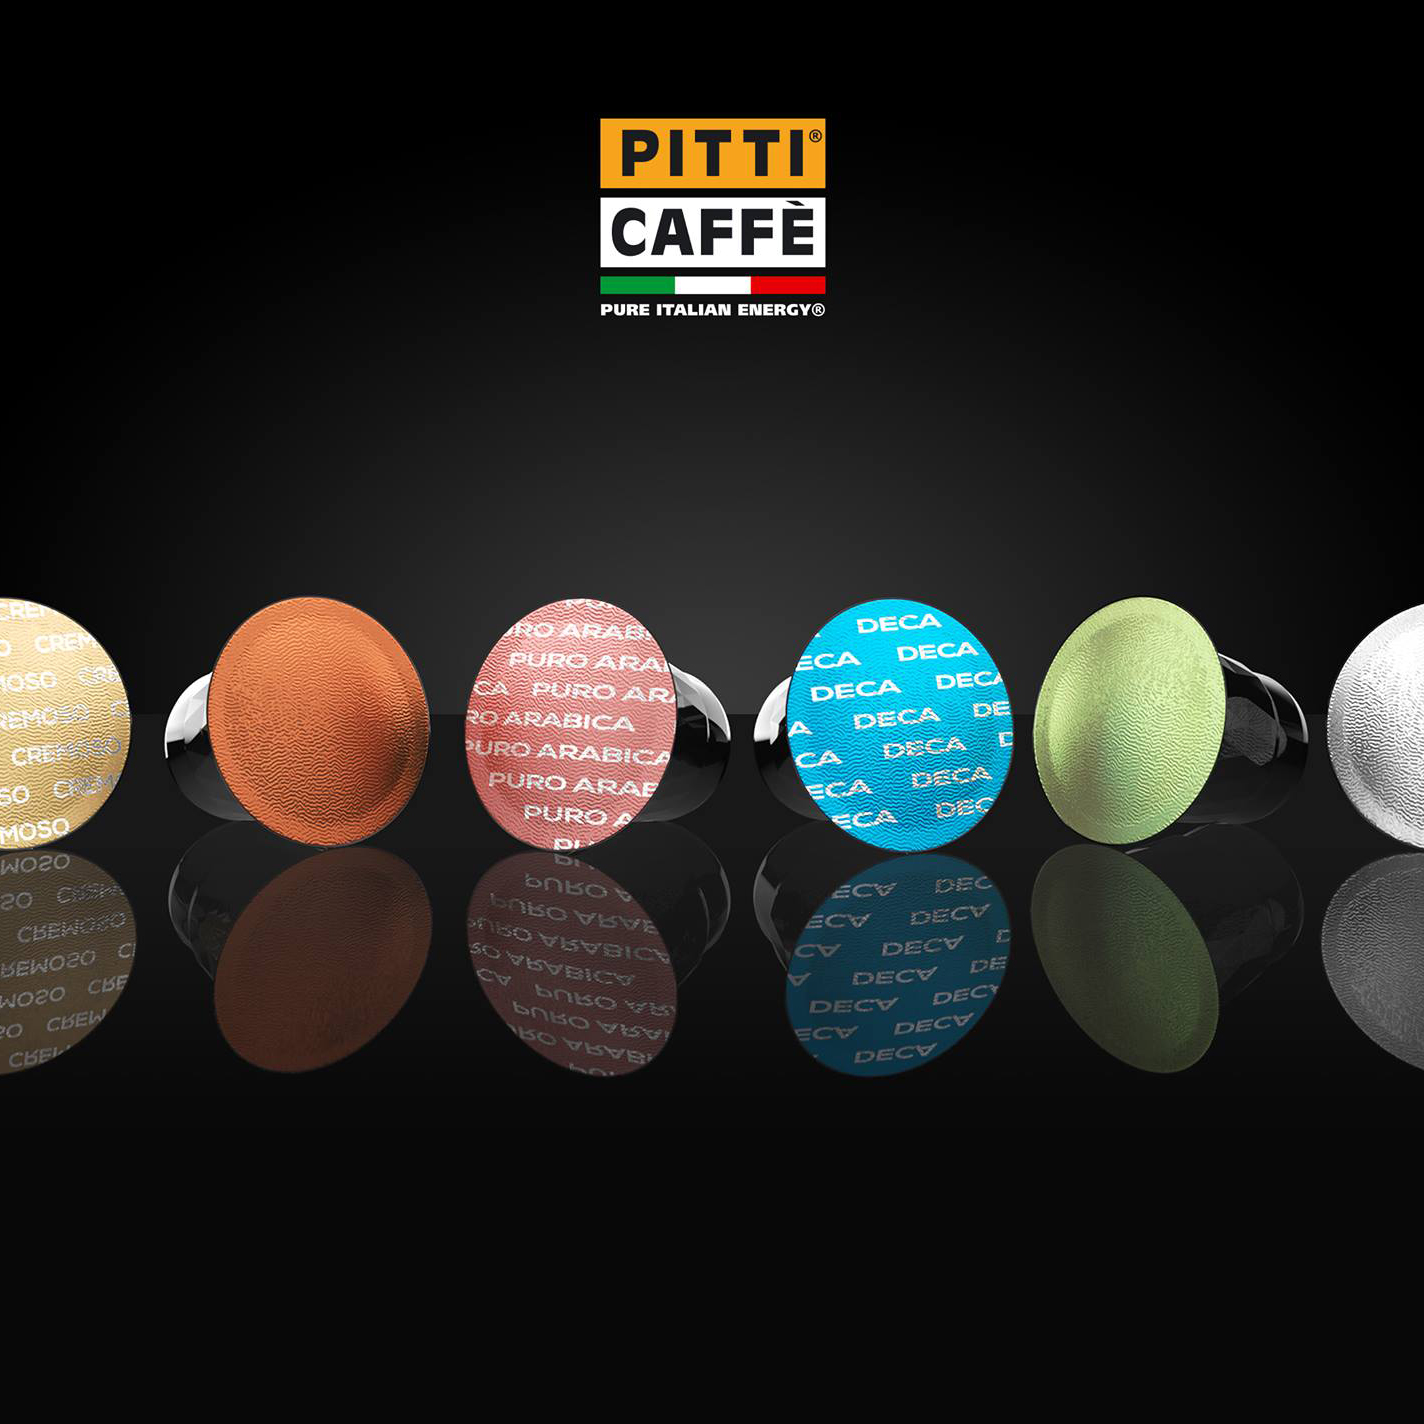 Pitti Caffe capsules